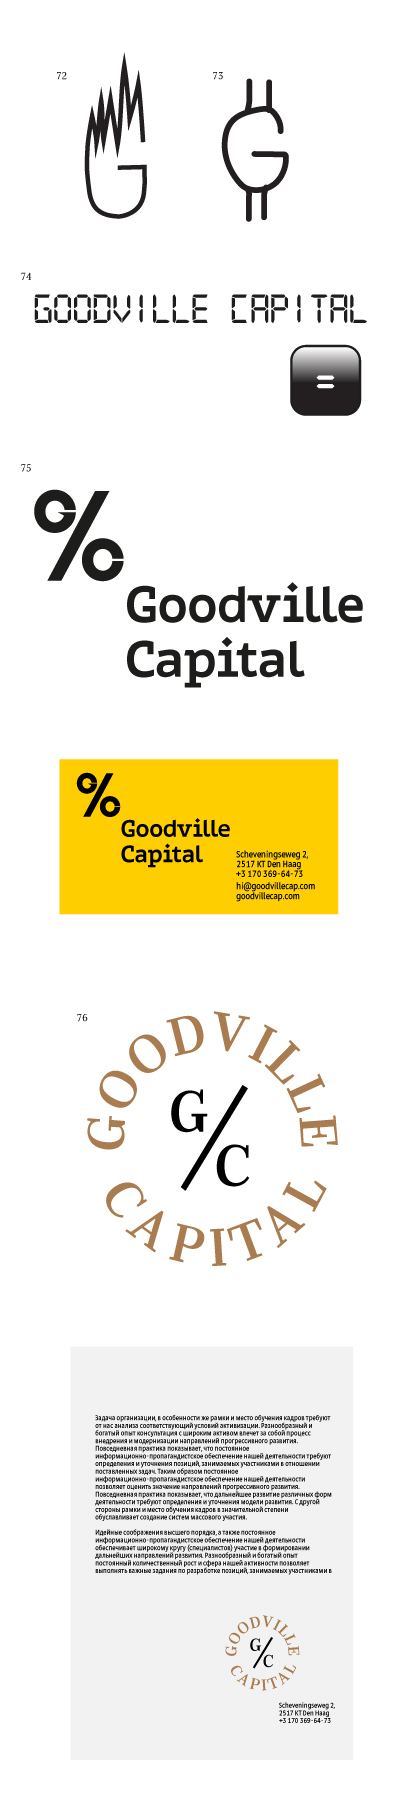 goodville capital process 10